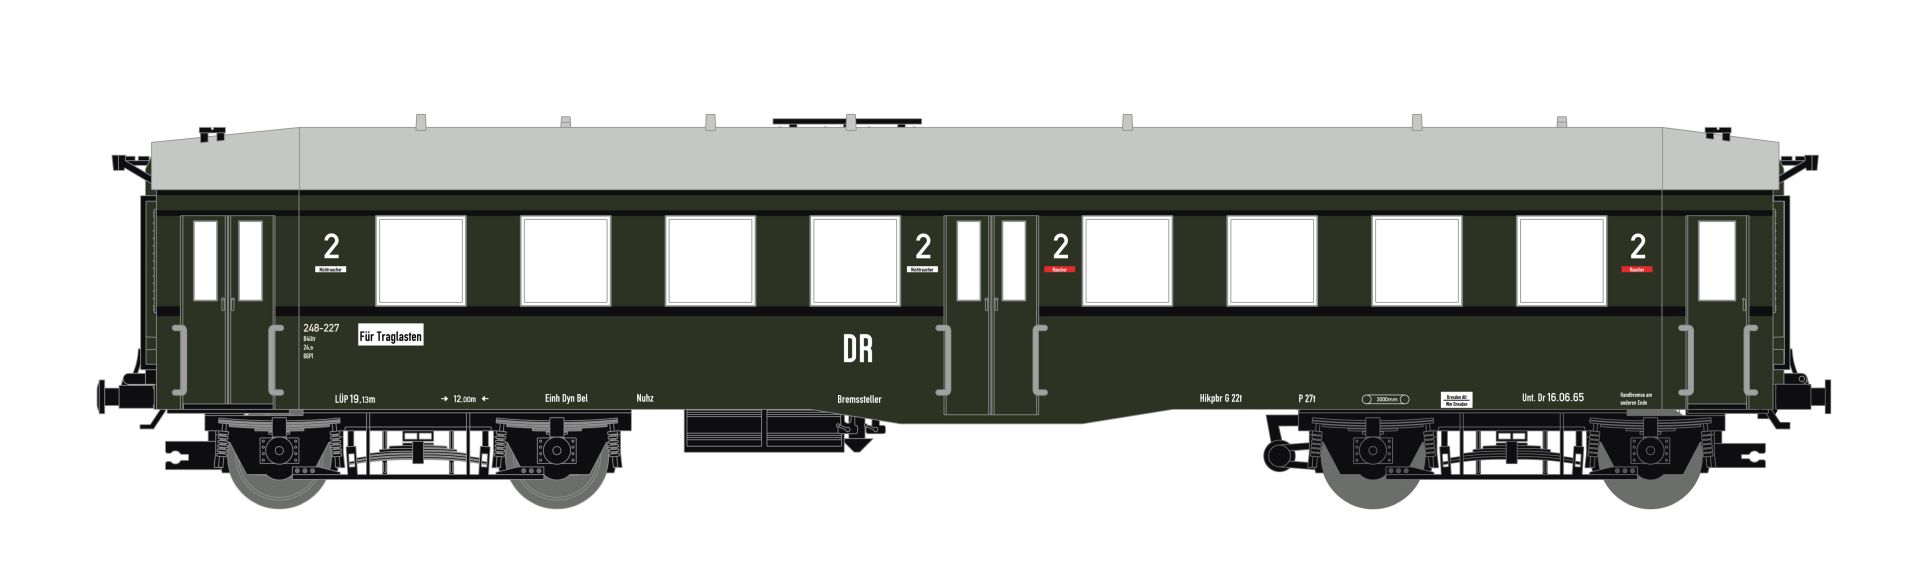 Saxonia 120006-2 - Personenwagen Bauart 'Altenberg', 2. Klasse, DR, Ep.III